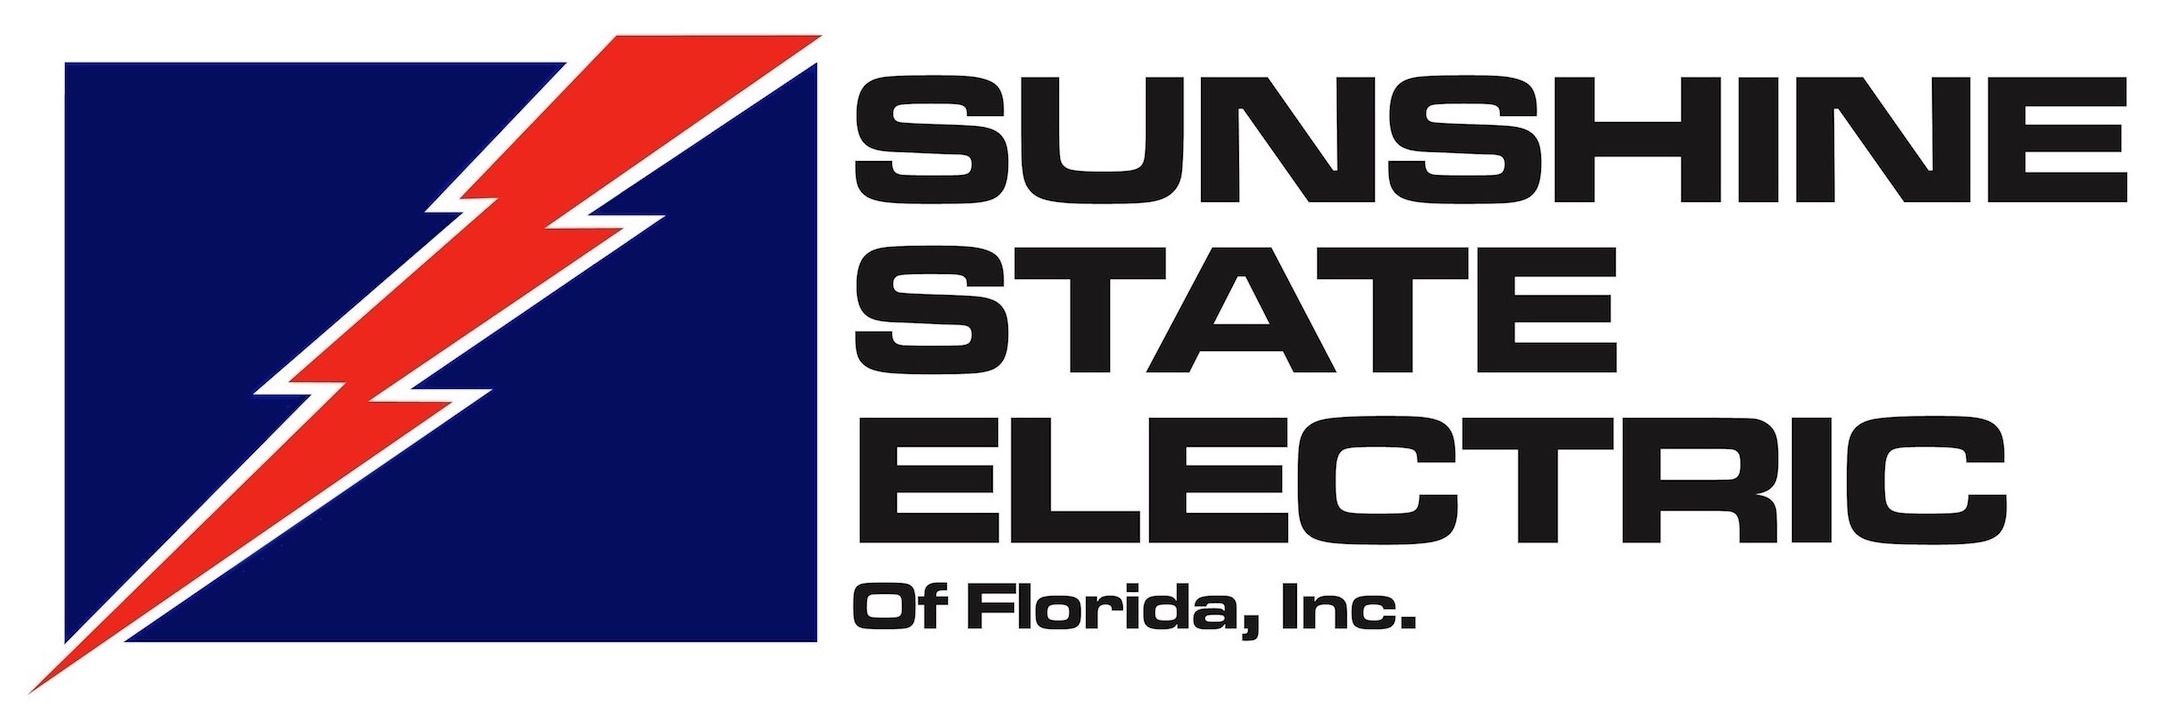 Sunshine State Electric of Florida, Inc.